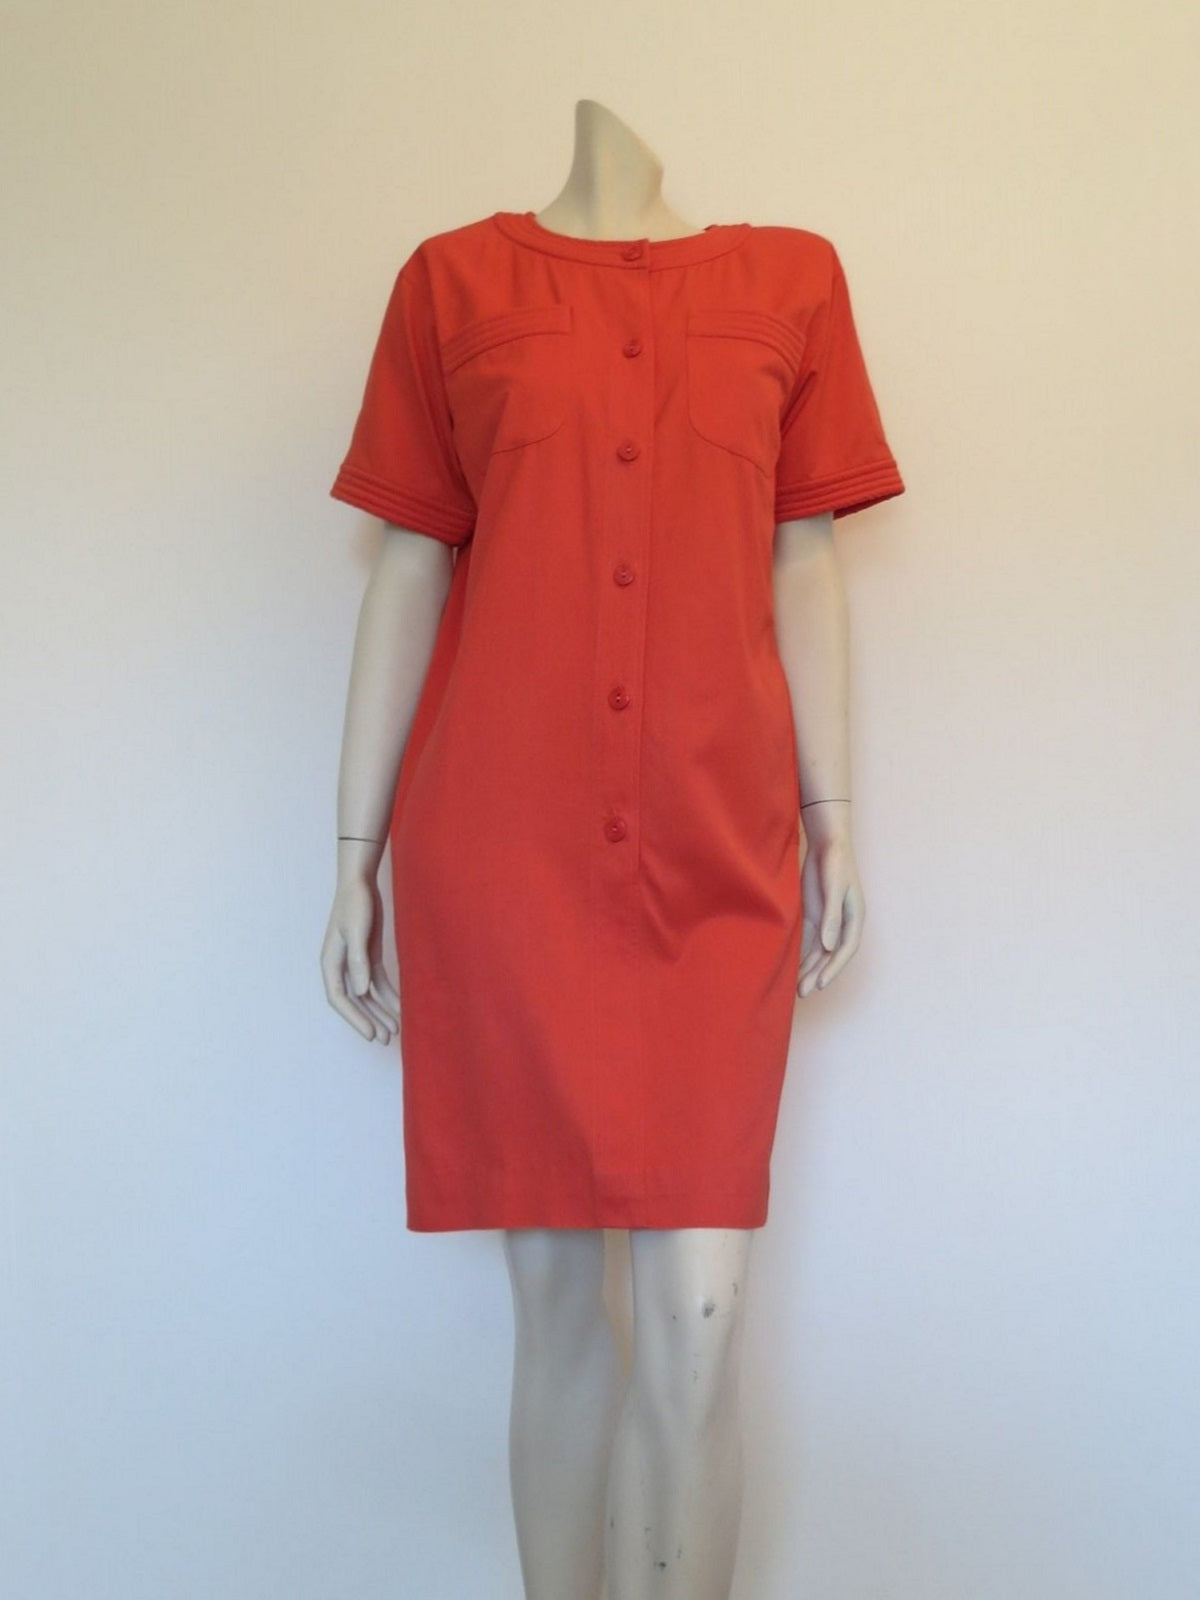 ungaro vintage designer orange dress 1980s fashion